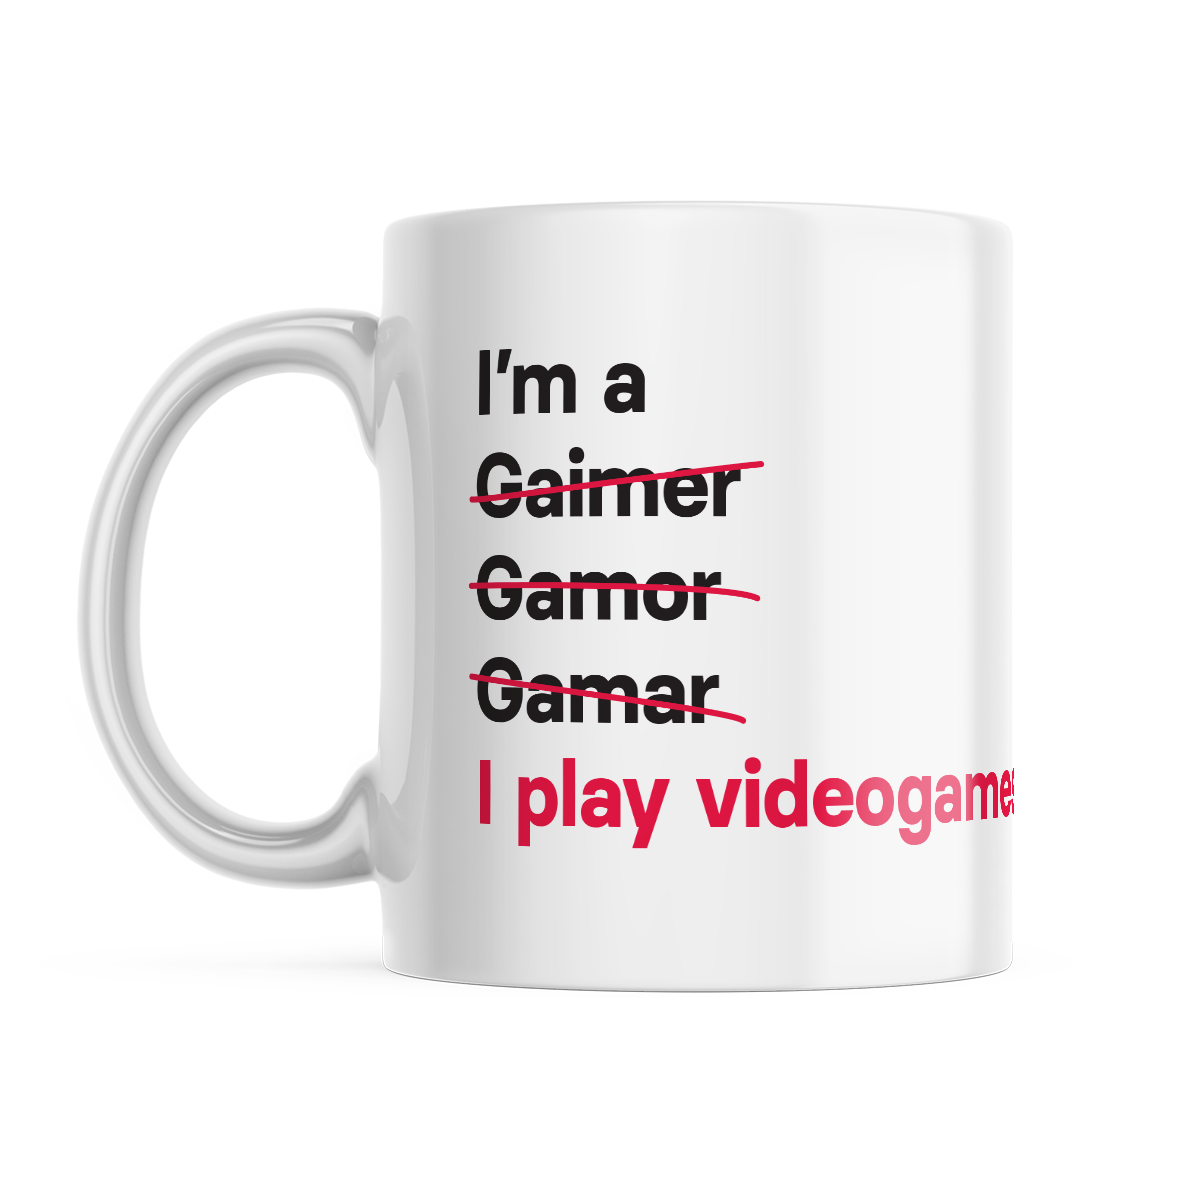 I'm a Gamer